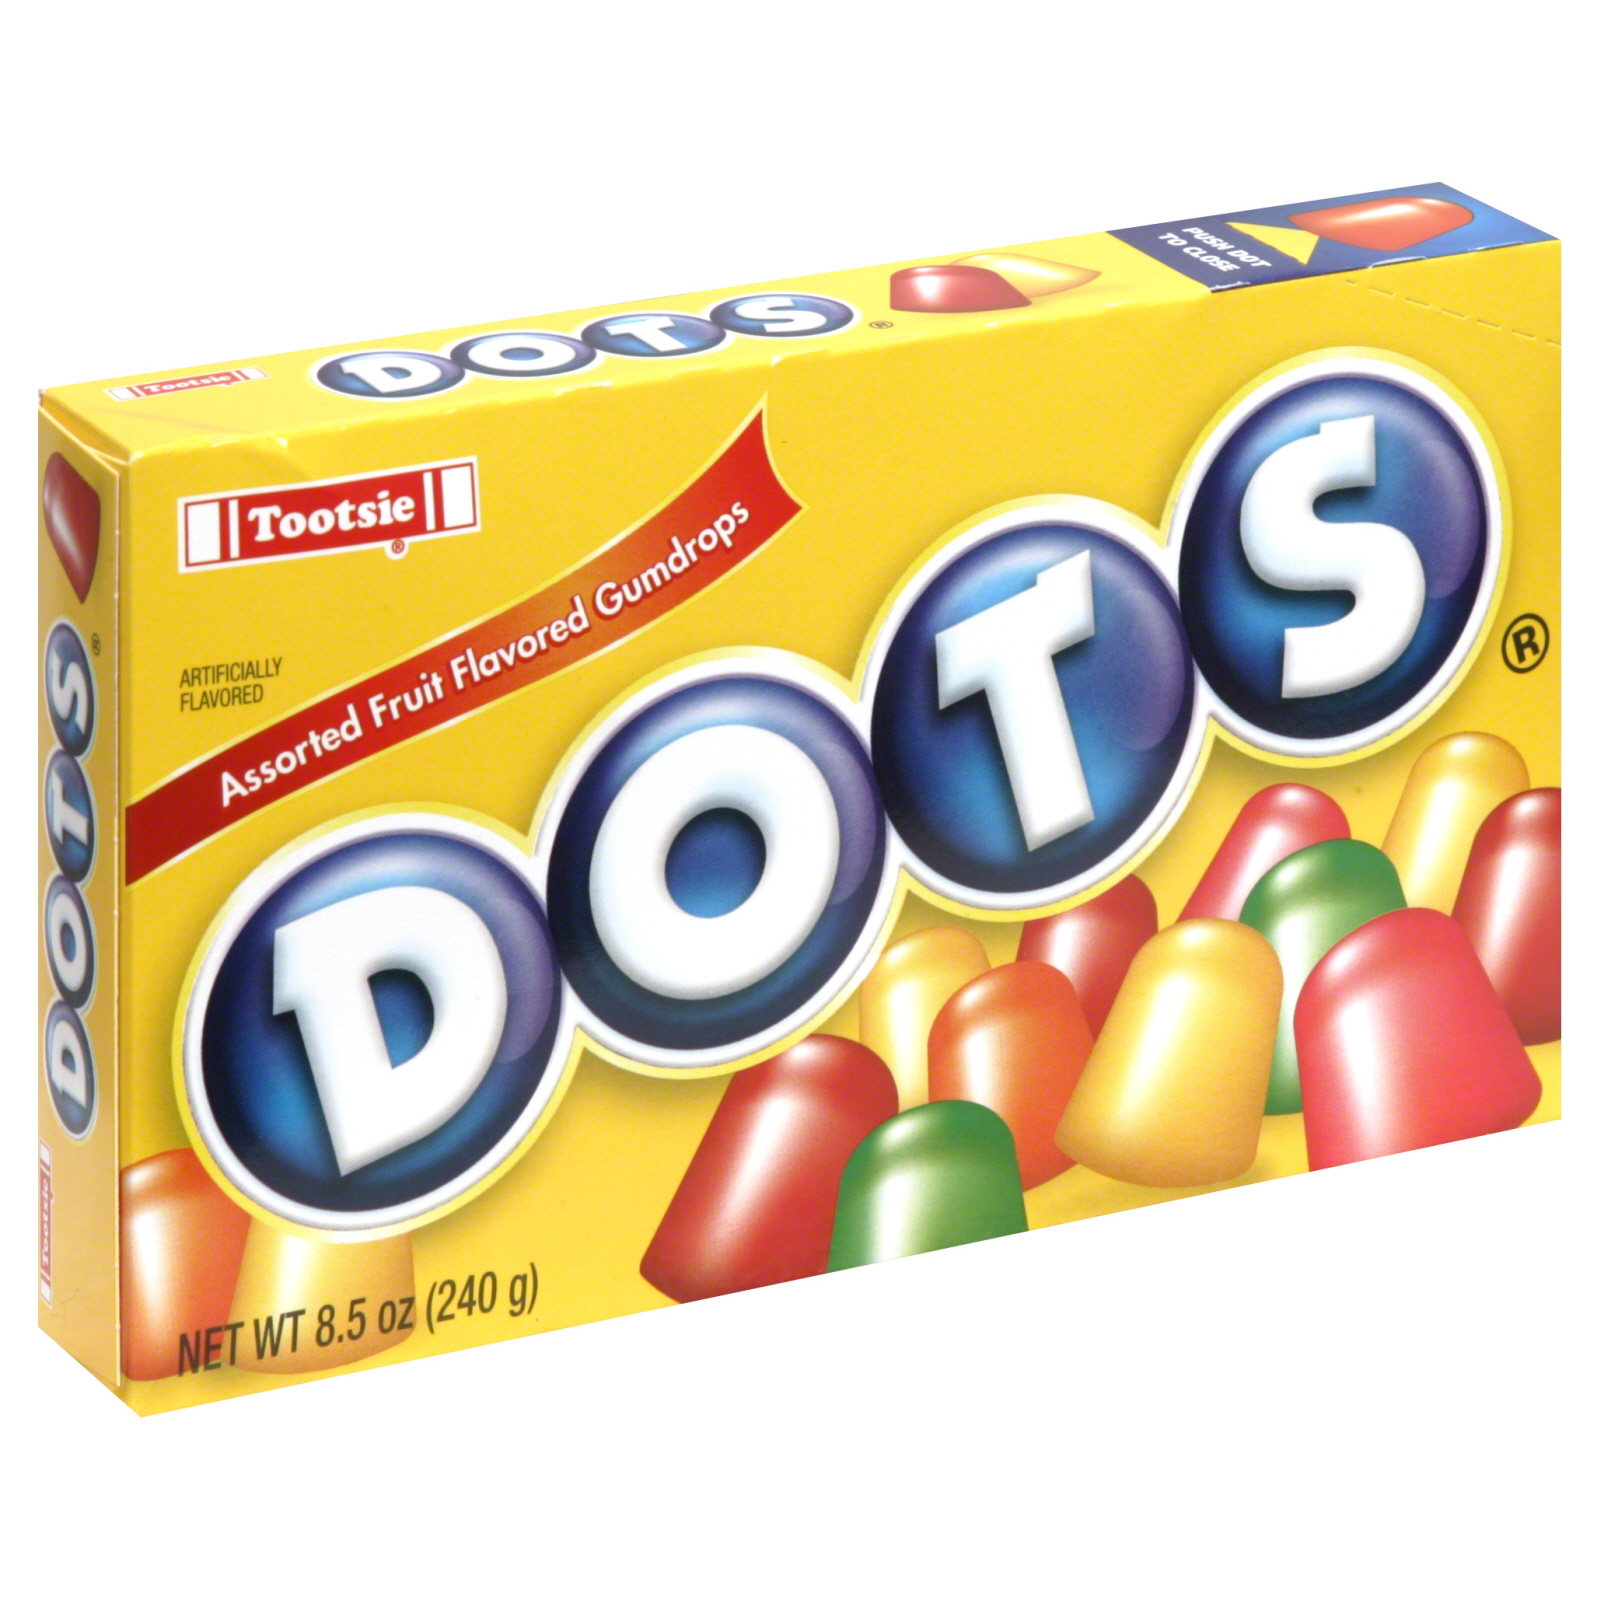 Dots Gumdrops, Assorted Fruit Flavor, 8.5 oz (240 g)